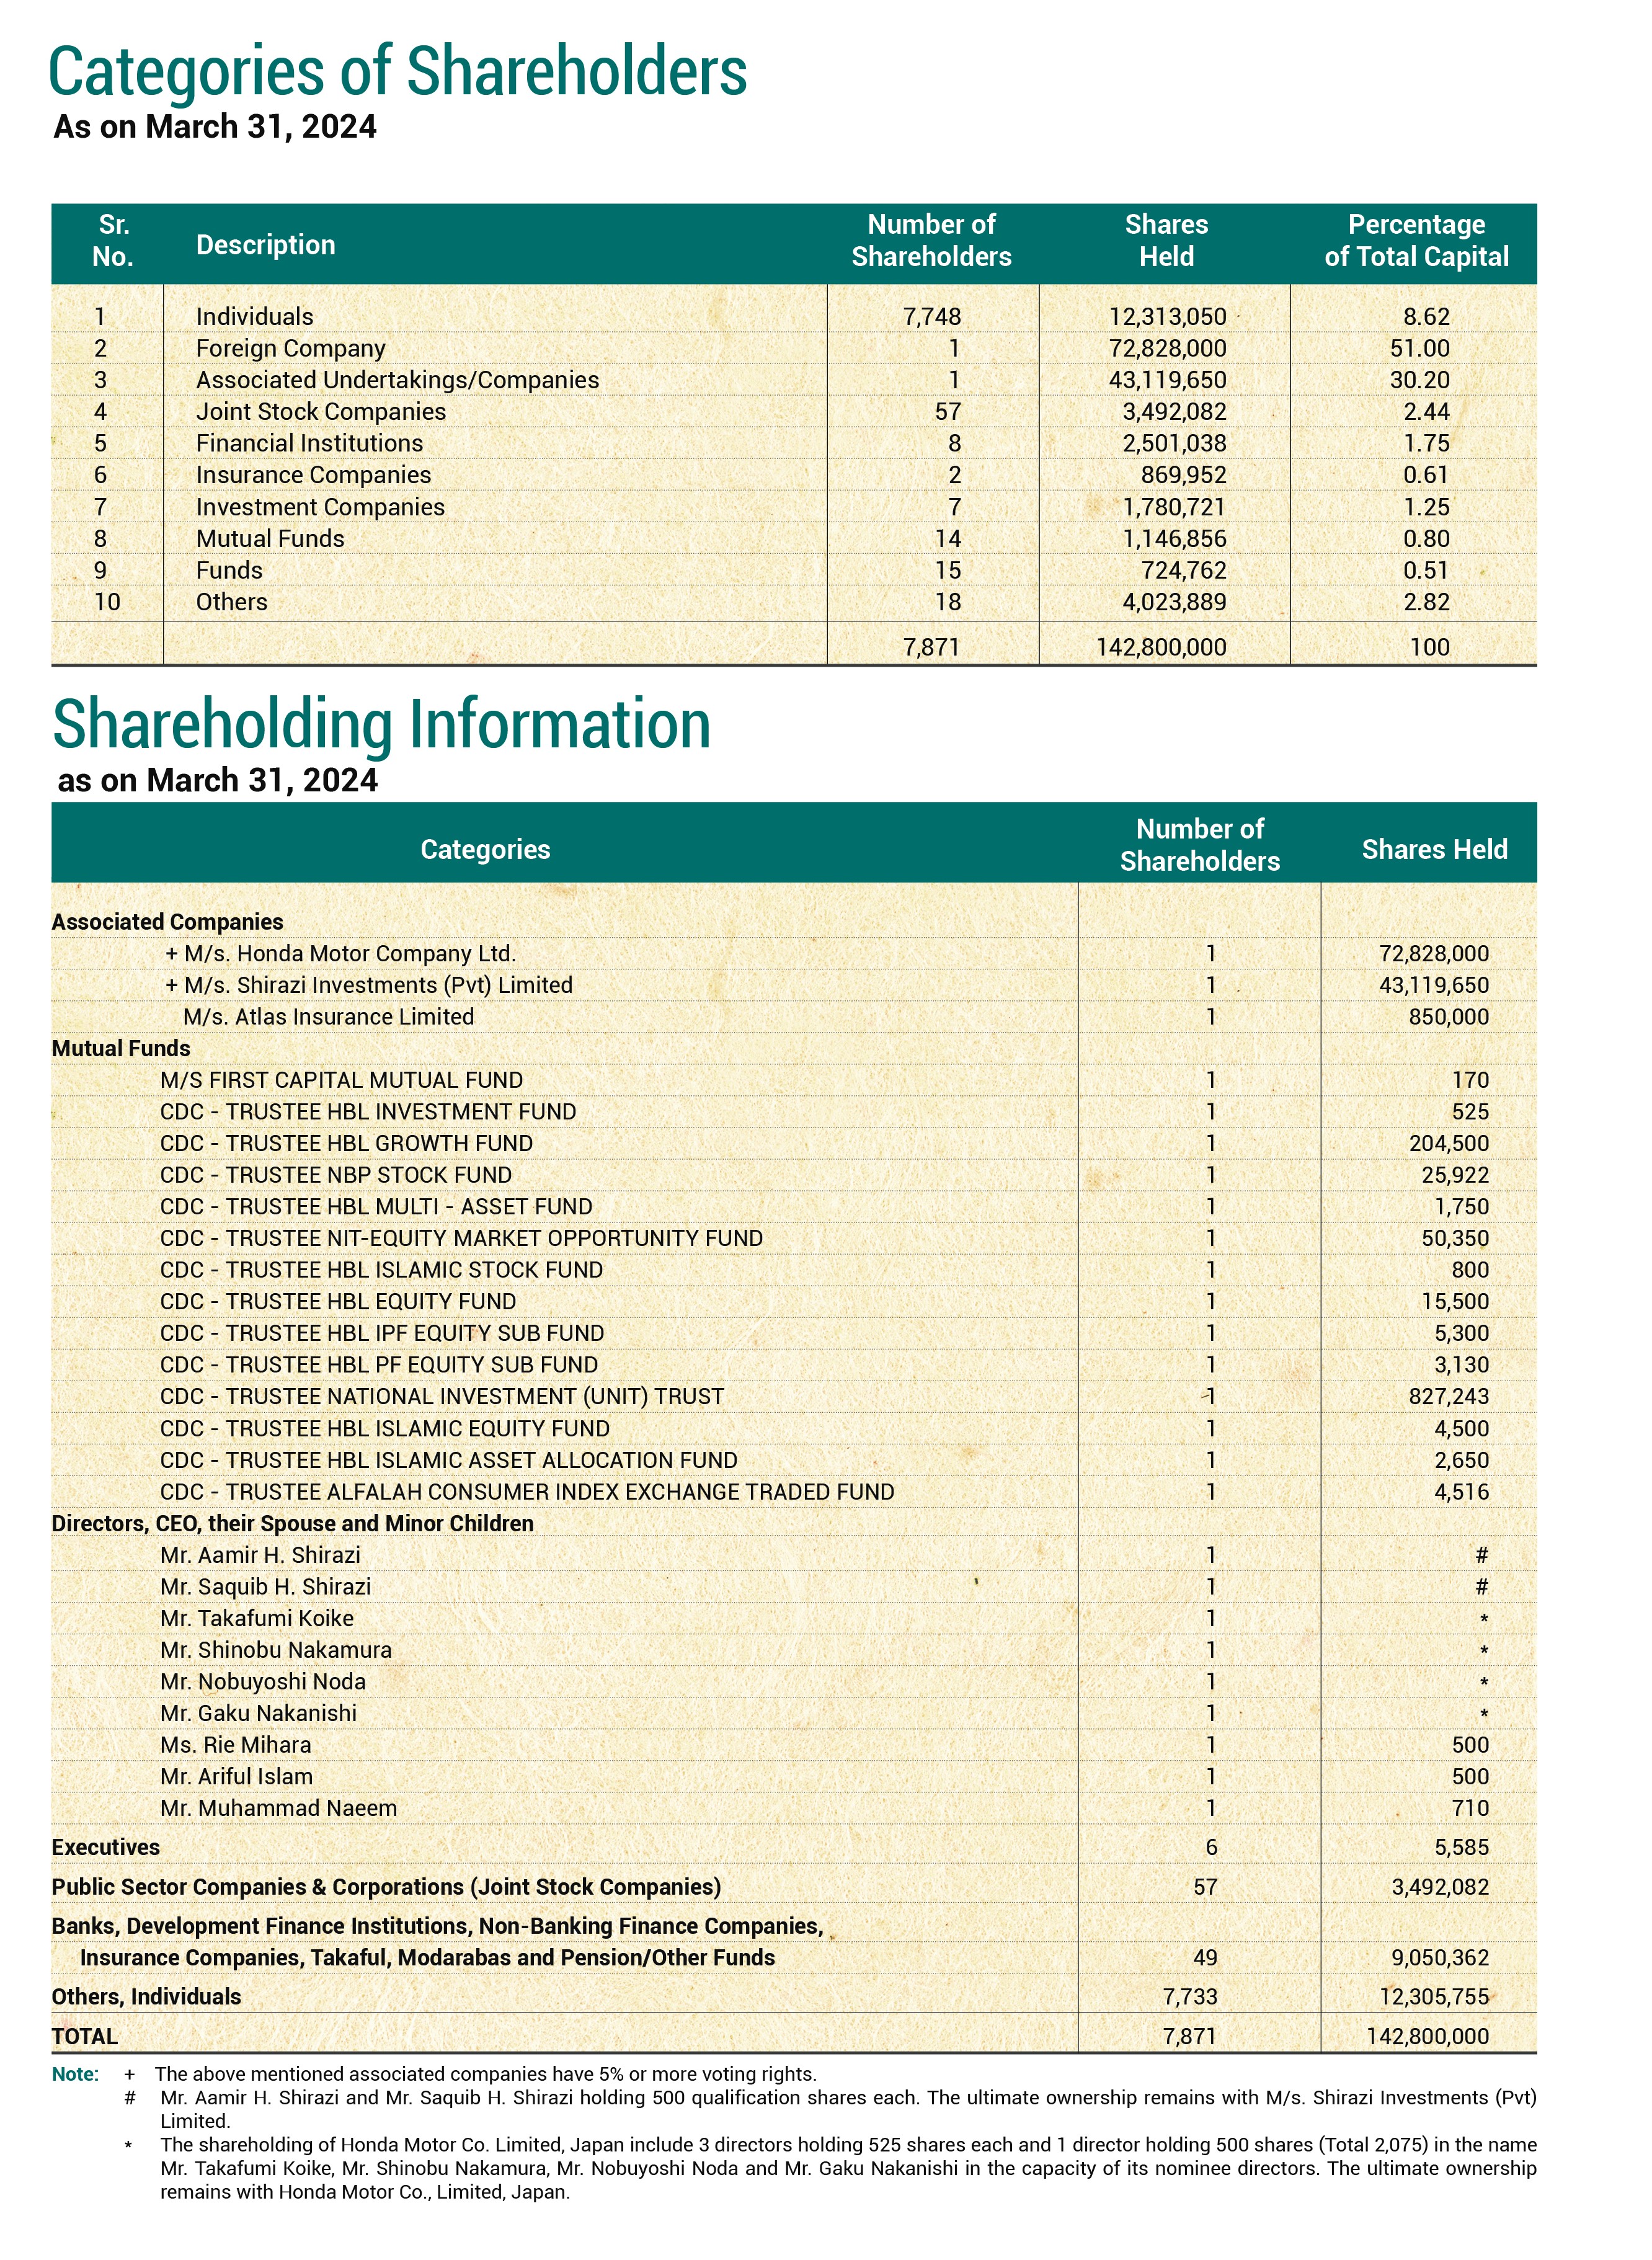 Pattern of Shareholding